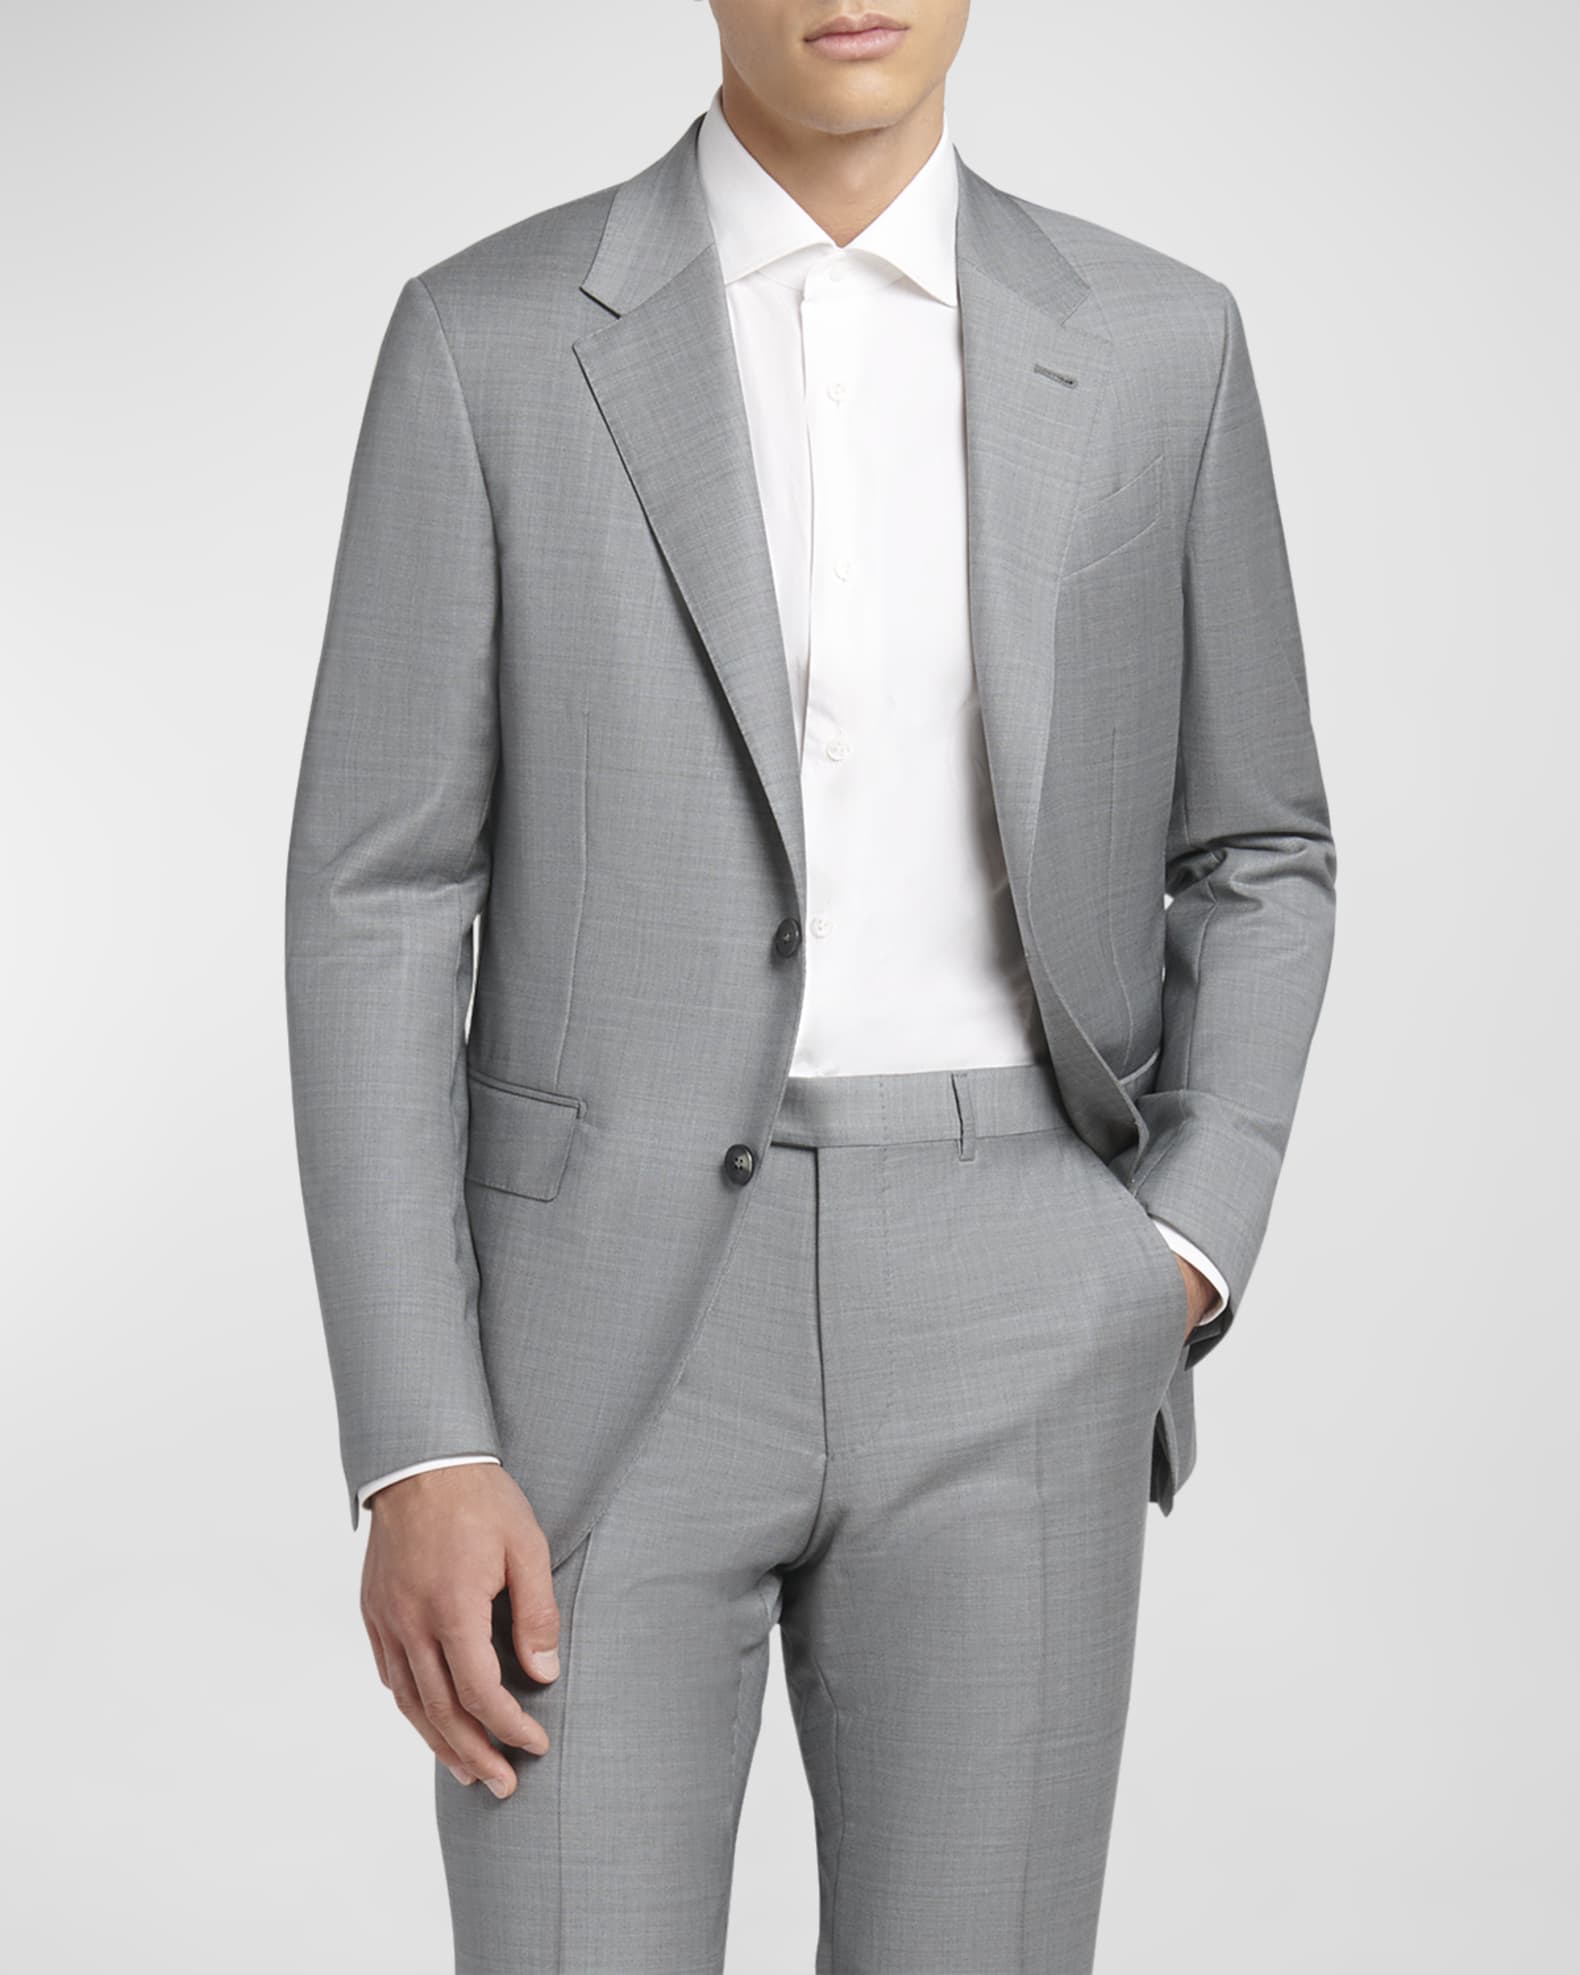 ZEGNA Men's Plaid Wool Suit | Neiman Marcus